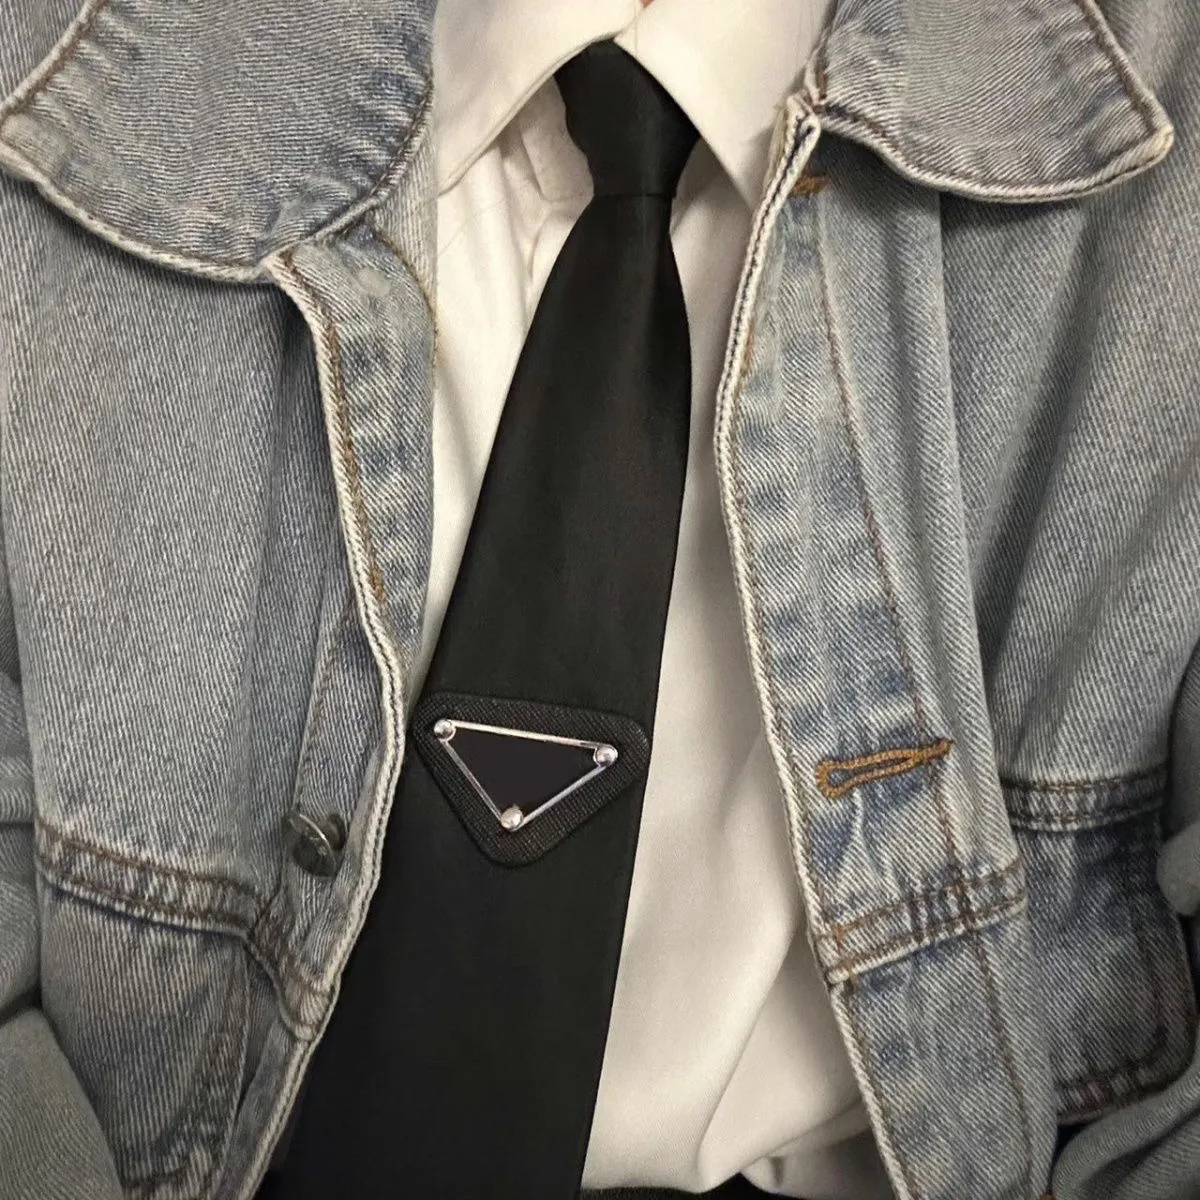 Designer Necktie Men's Women's Fashion Classic Fashion Black Tie Silk Ties Party Wedding Solid Color Neck Tie For Men Leather Bow Tie Triangle Pattern Letter Neck Ties